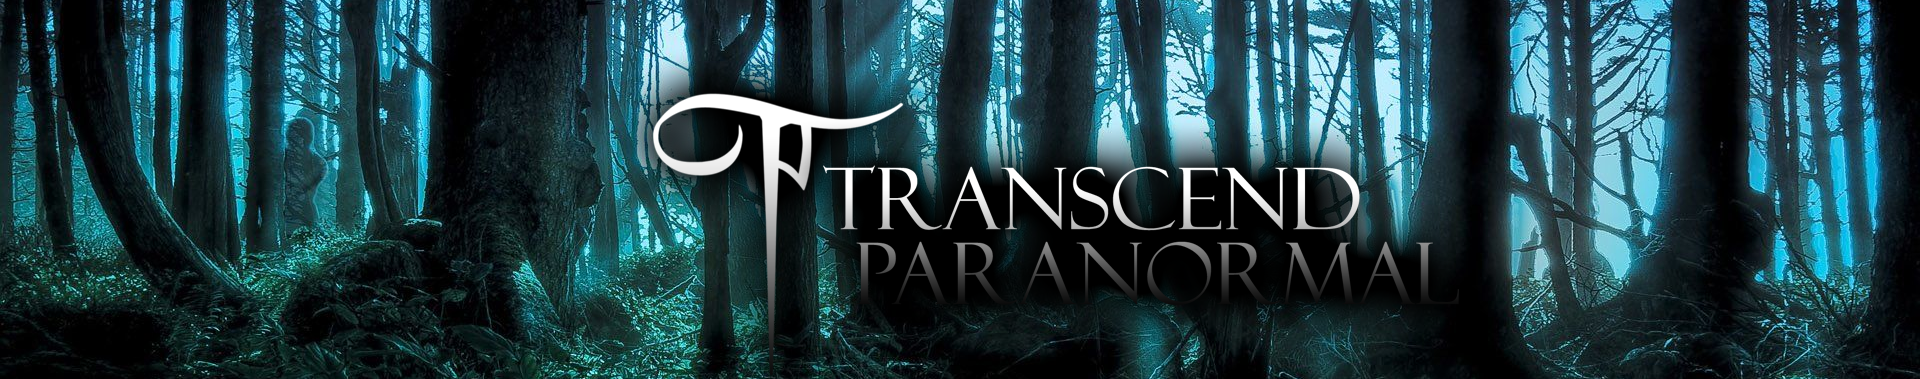 Transcend Paranormal